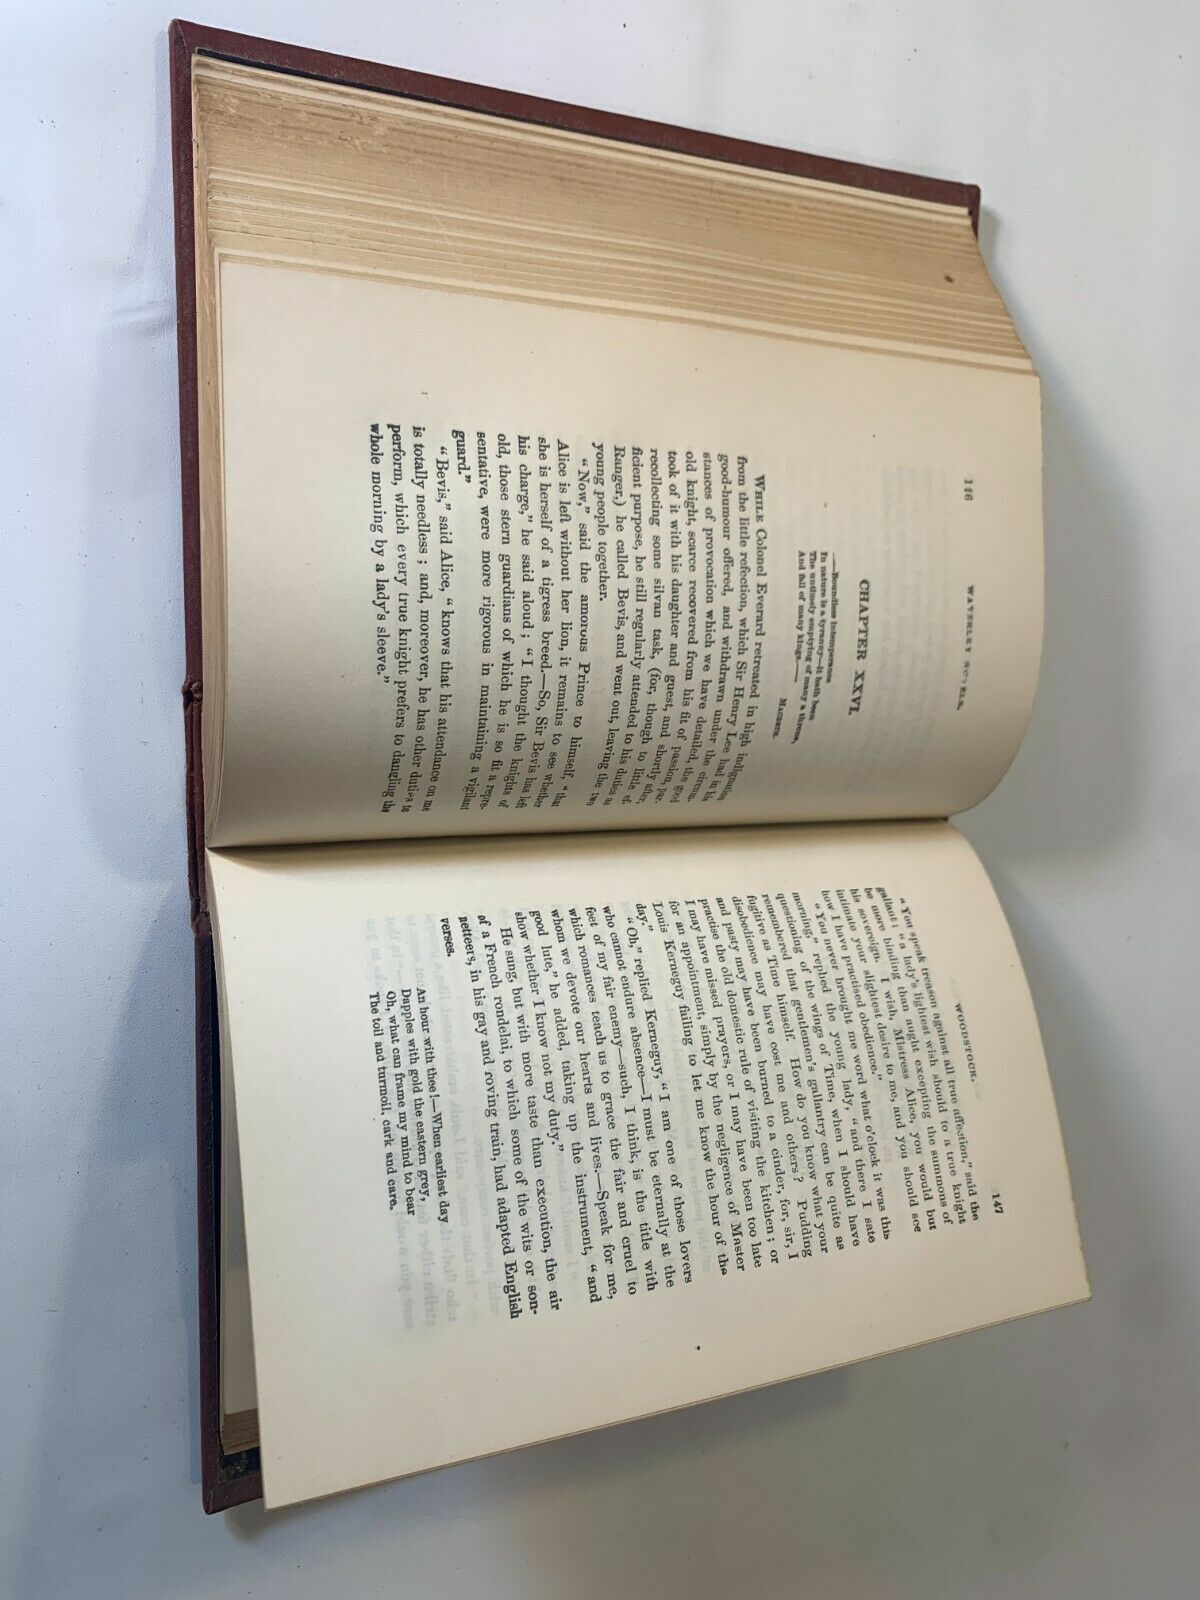 Woodstock, Waverly Novels, Illustrated Library Edition Waverly Novels (1800s)